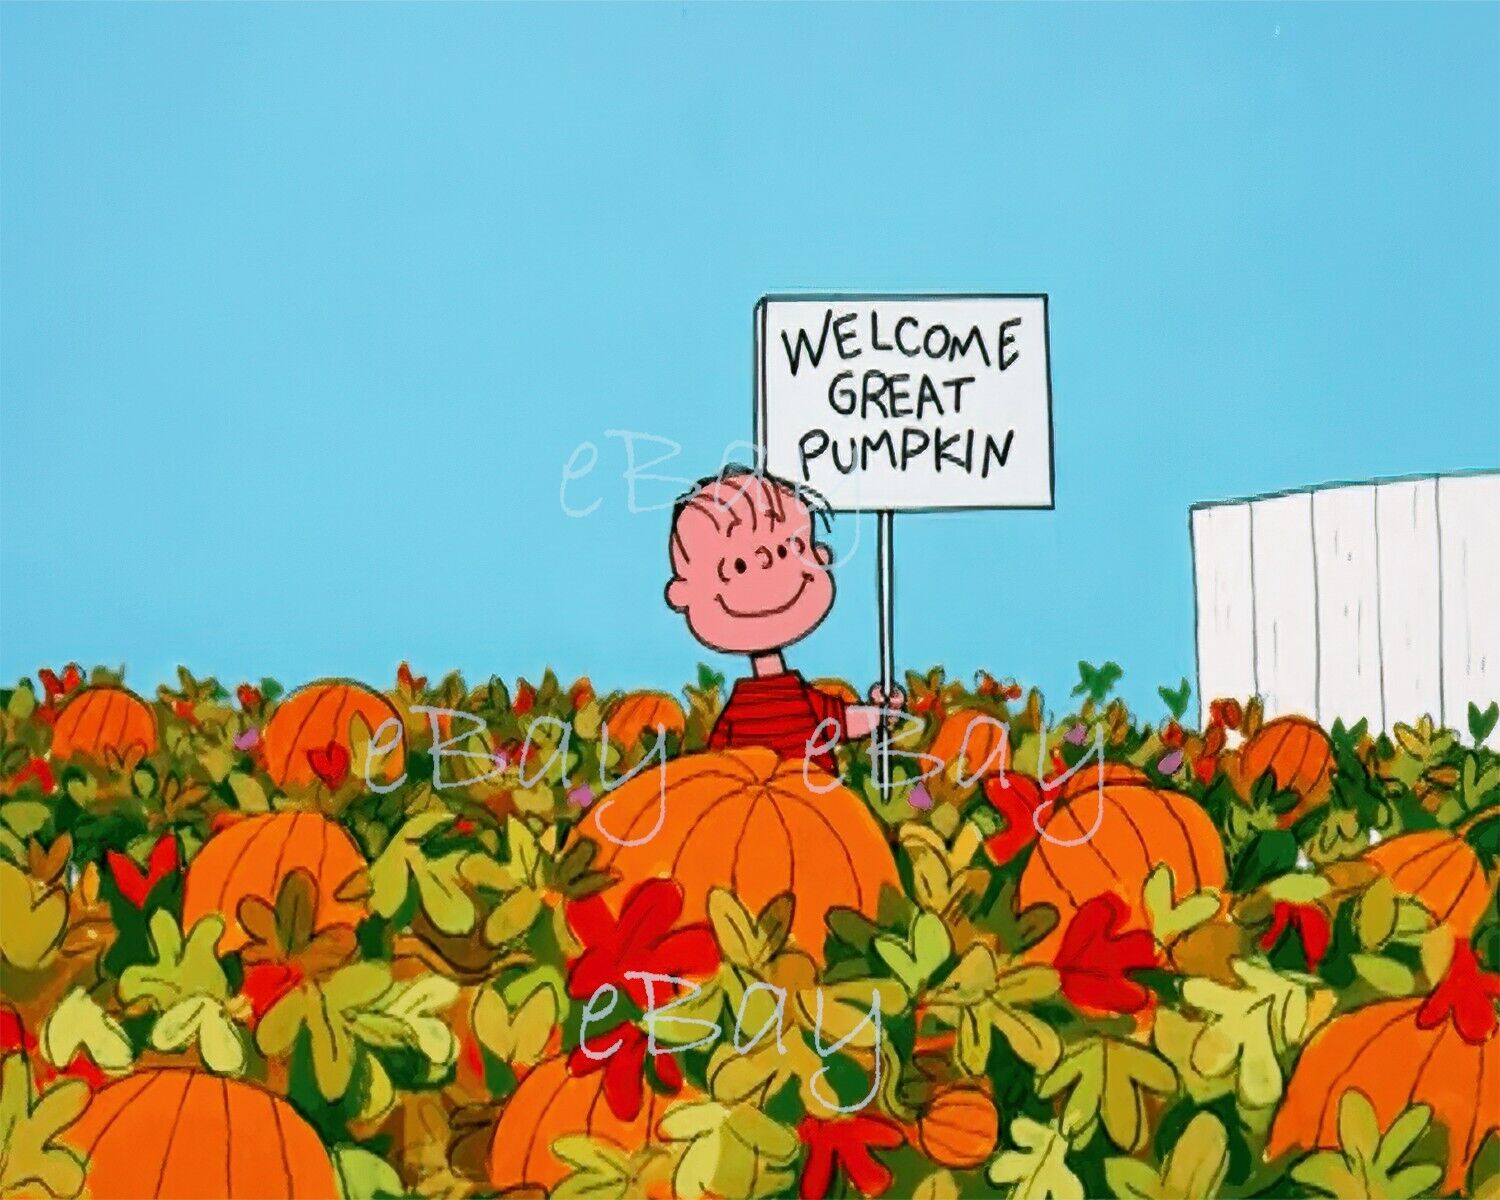 Peanuts Welcome Great Pumpkin 8x10 Photo Reprint